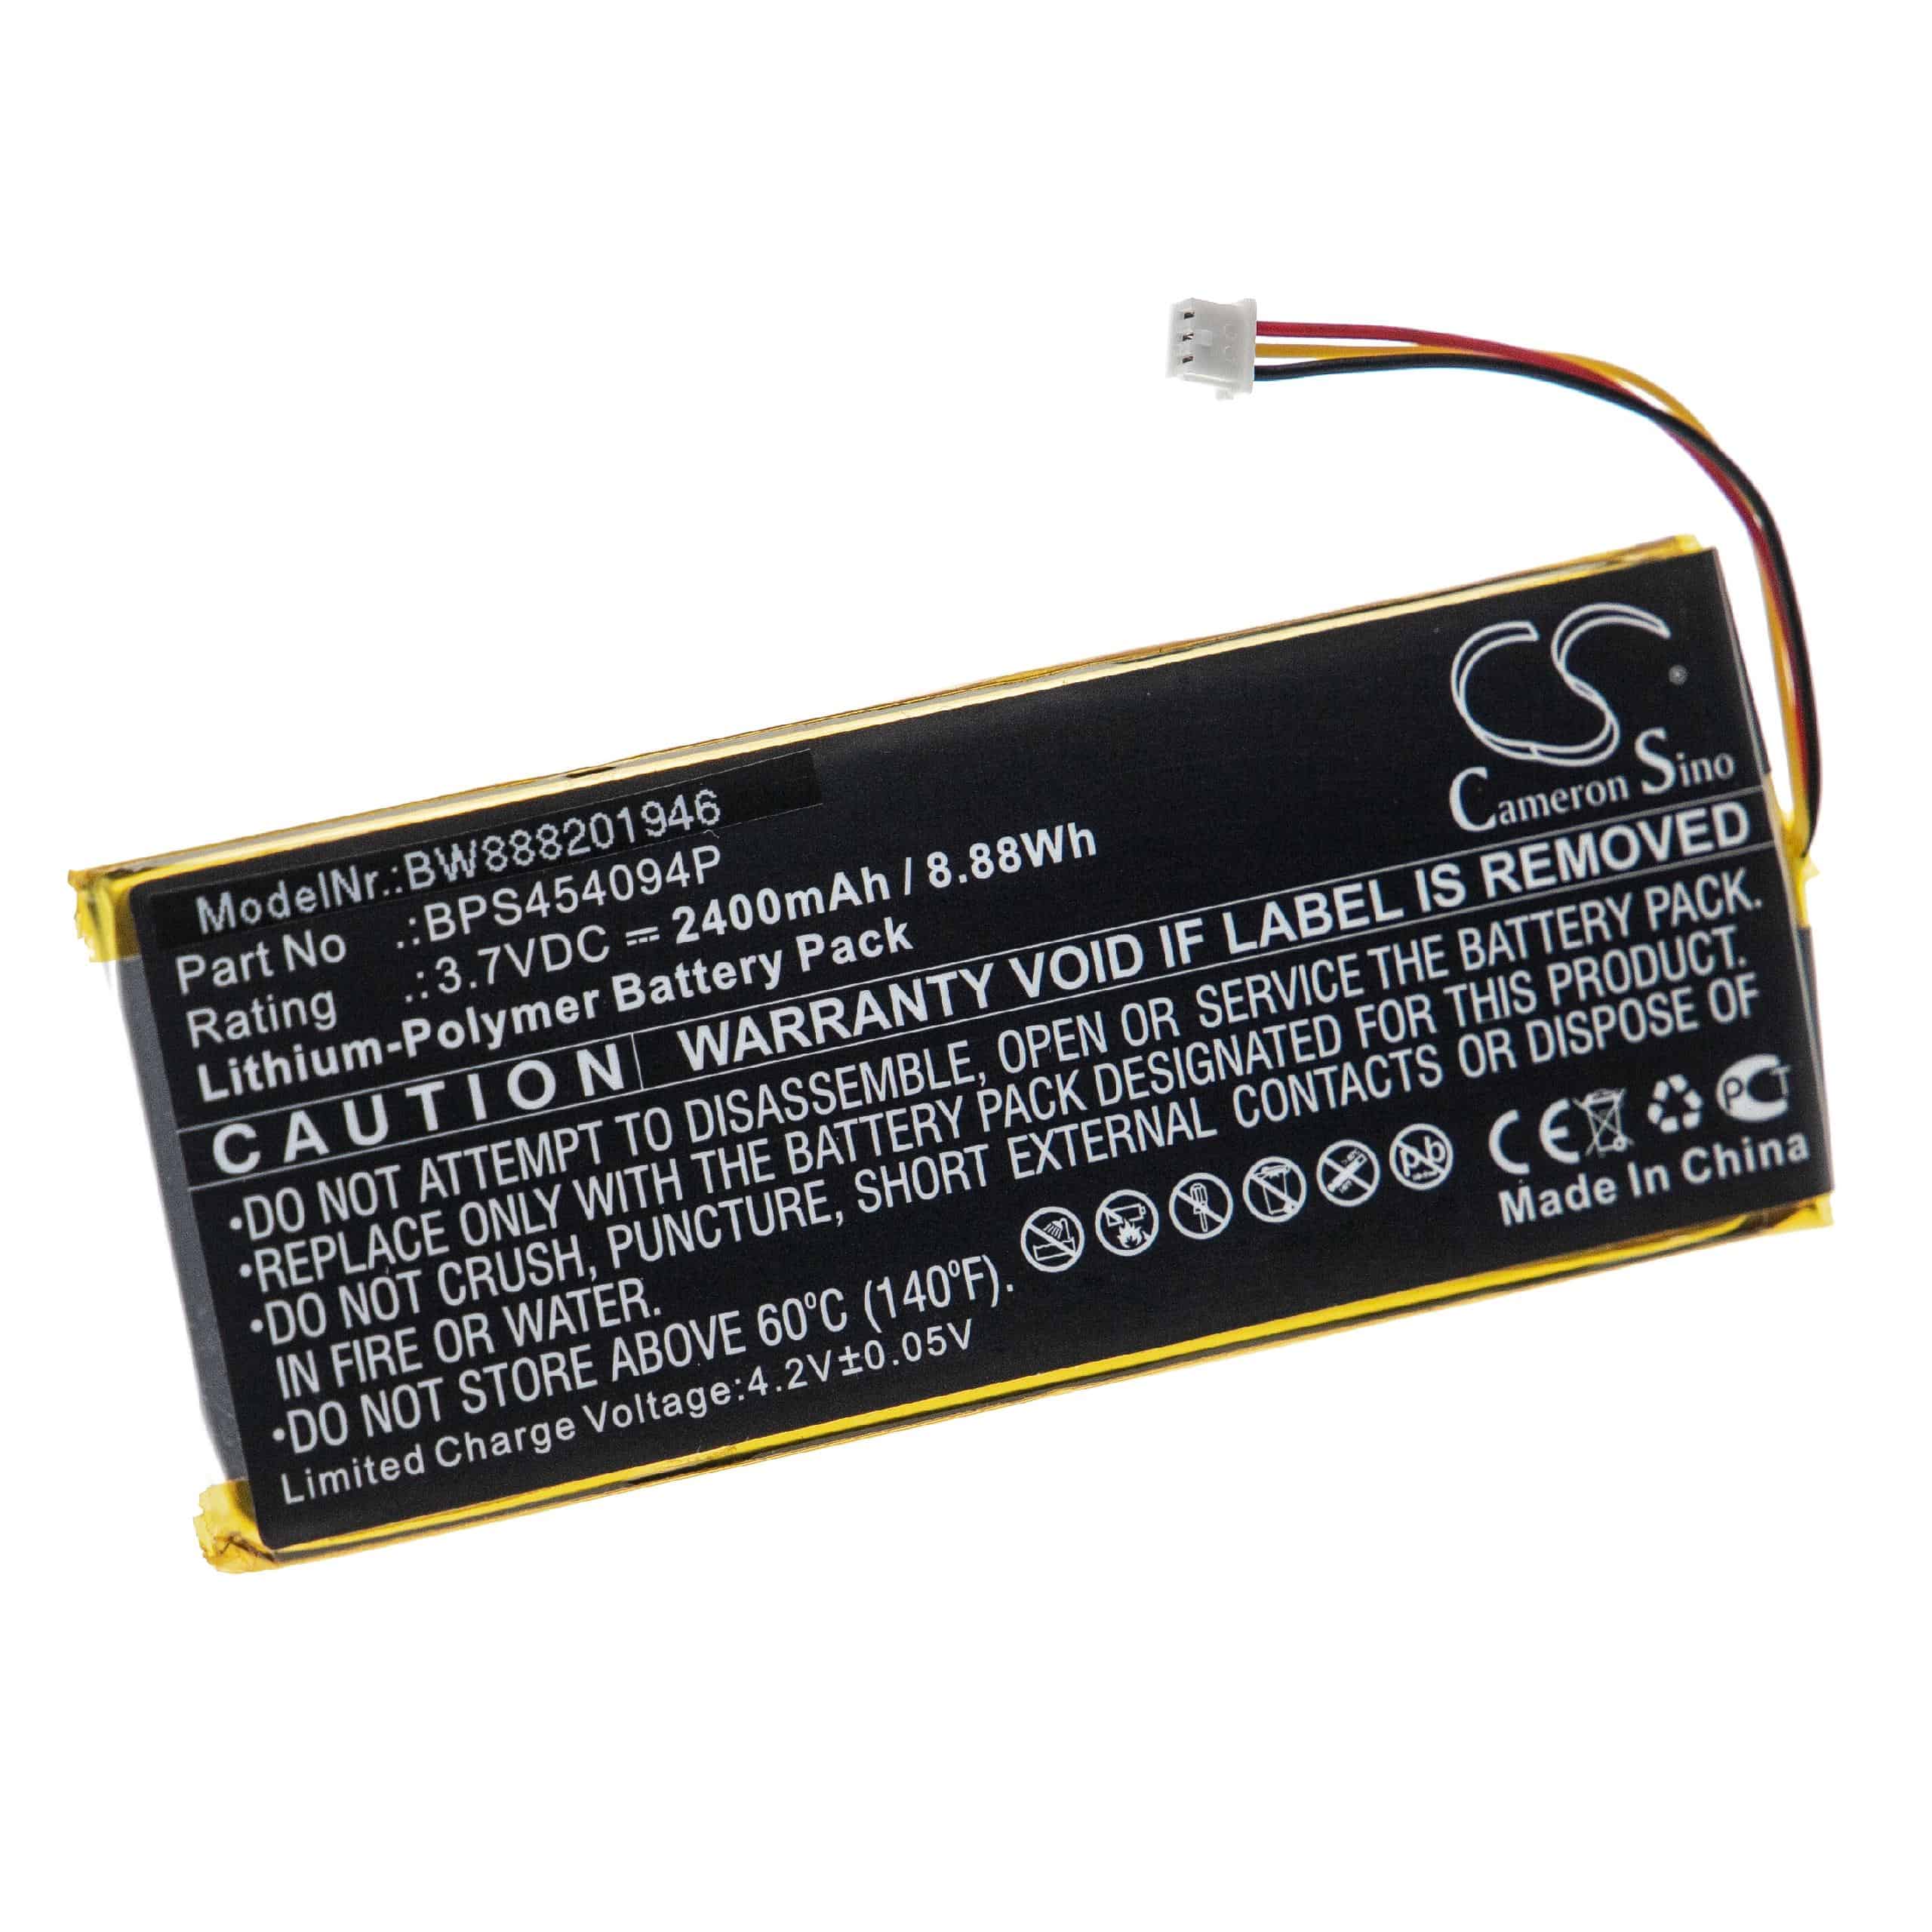 DAB Radio Battery Replacement for Geneva BPS454094P - 2400mAh 3.7V Li-polymer